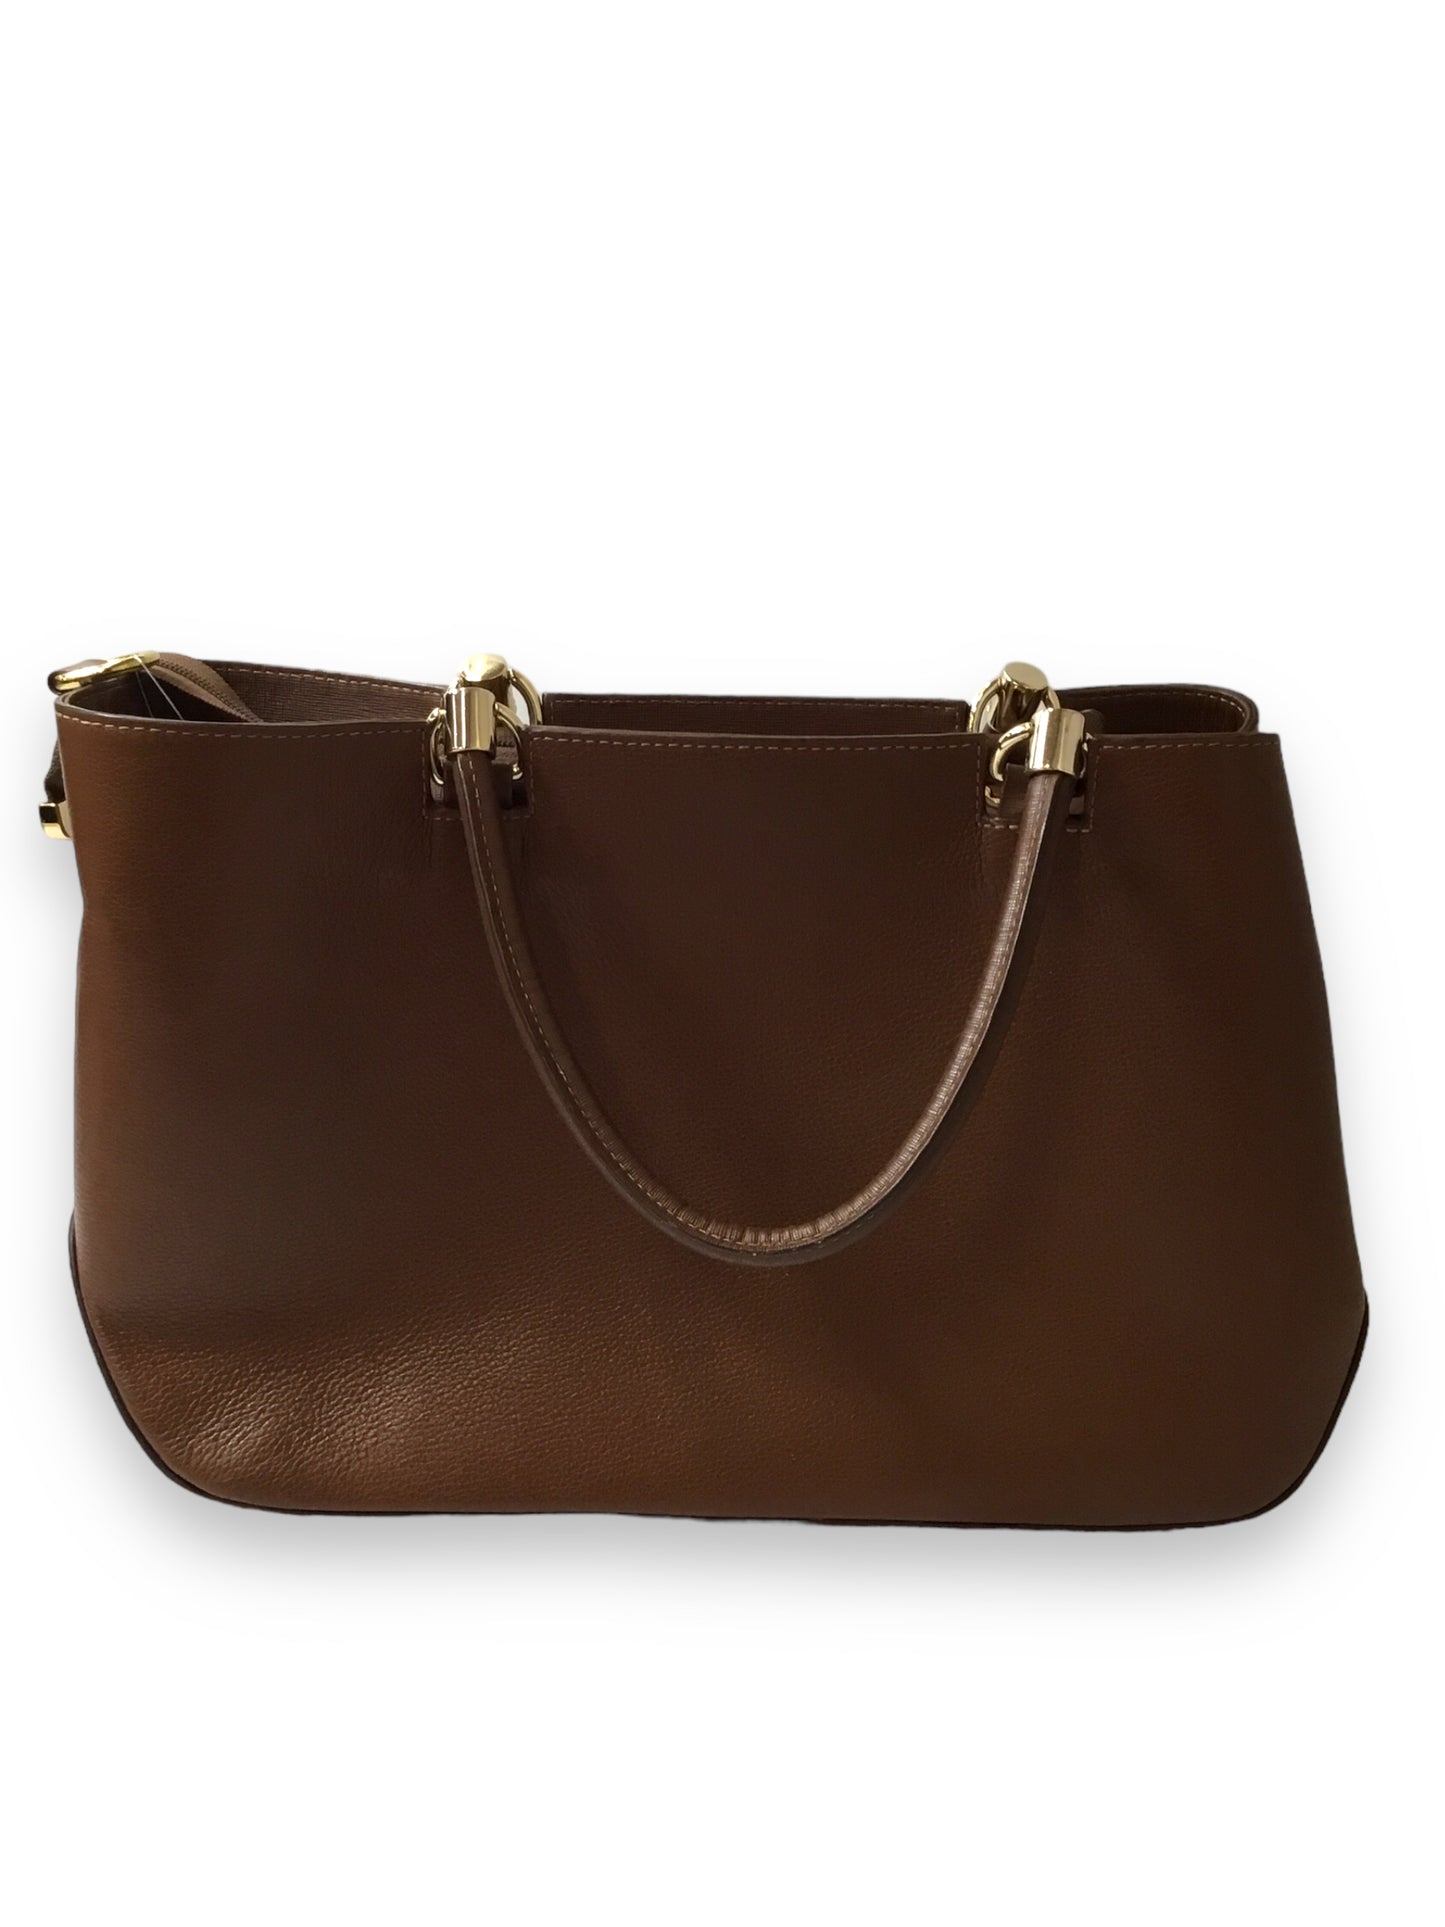 Handbag By Clothes Mentor  Size: Medium